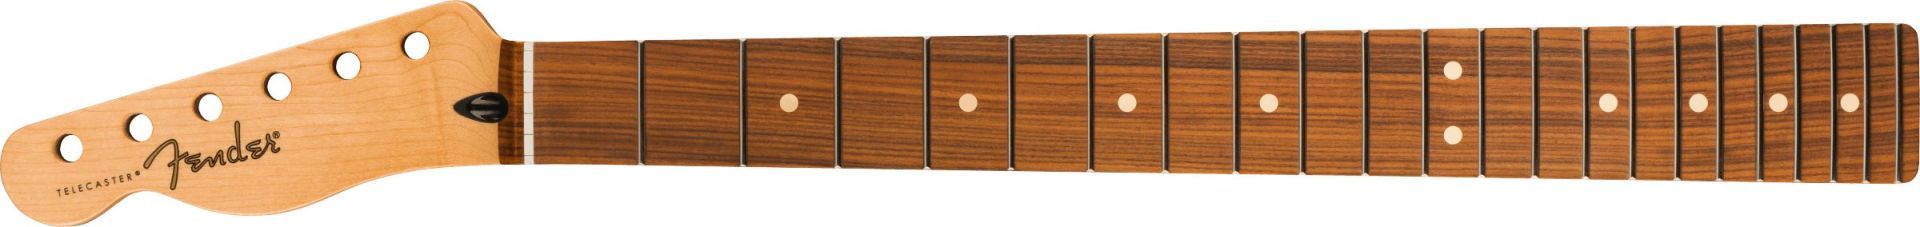 Fender Player Series Telecaster Left-Handed Neck 22 Medium Jumbo Frets 9.5 Radius Natural